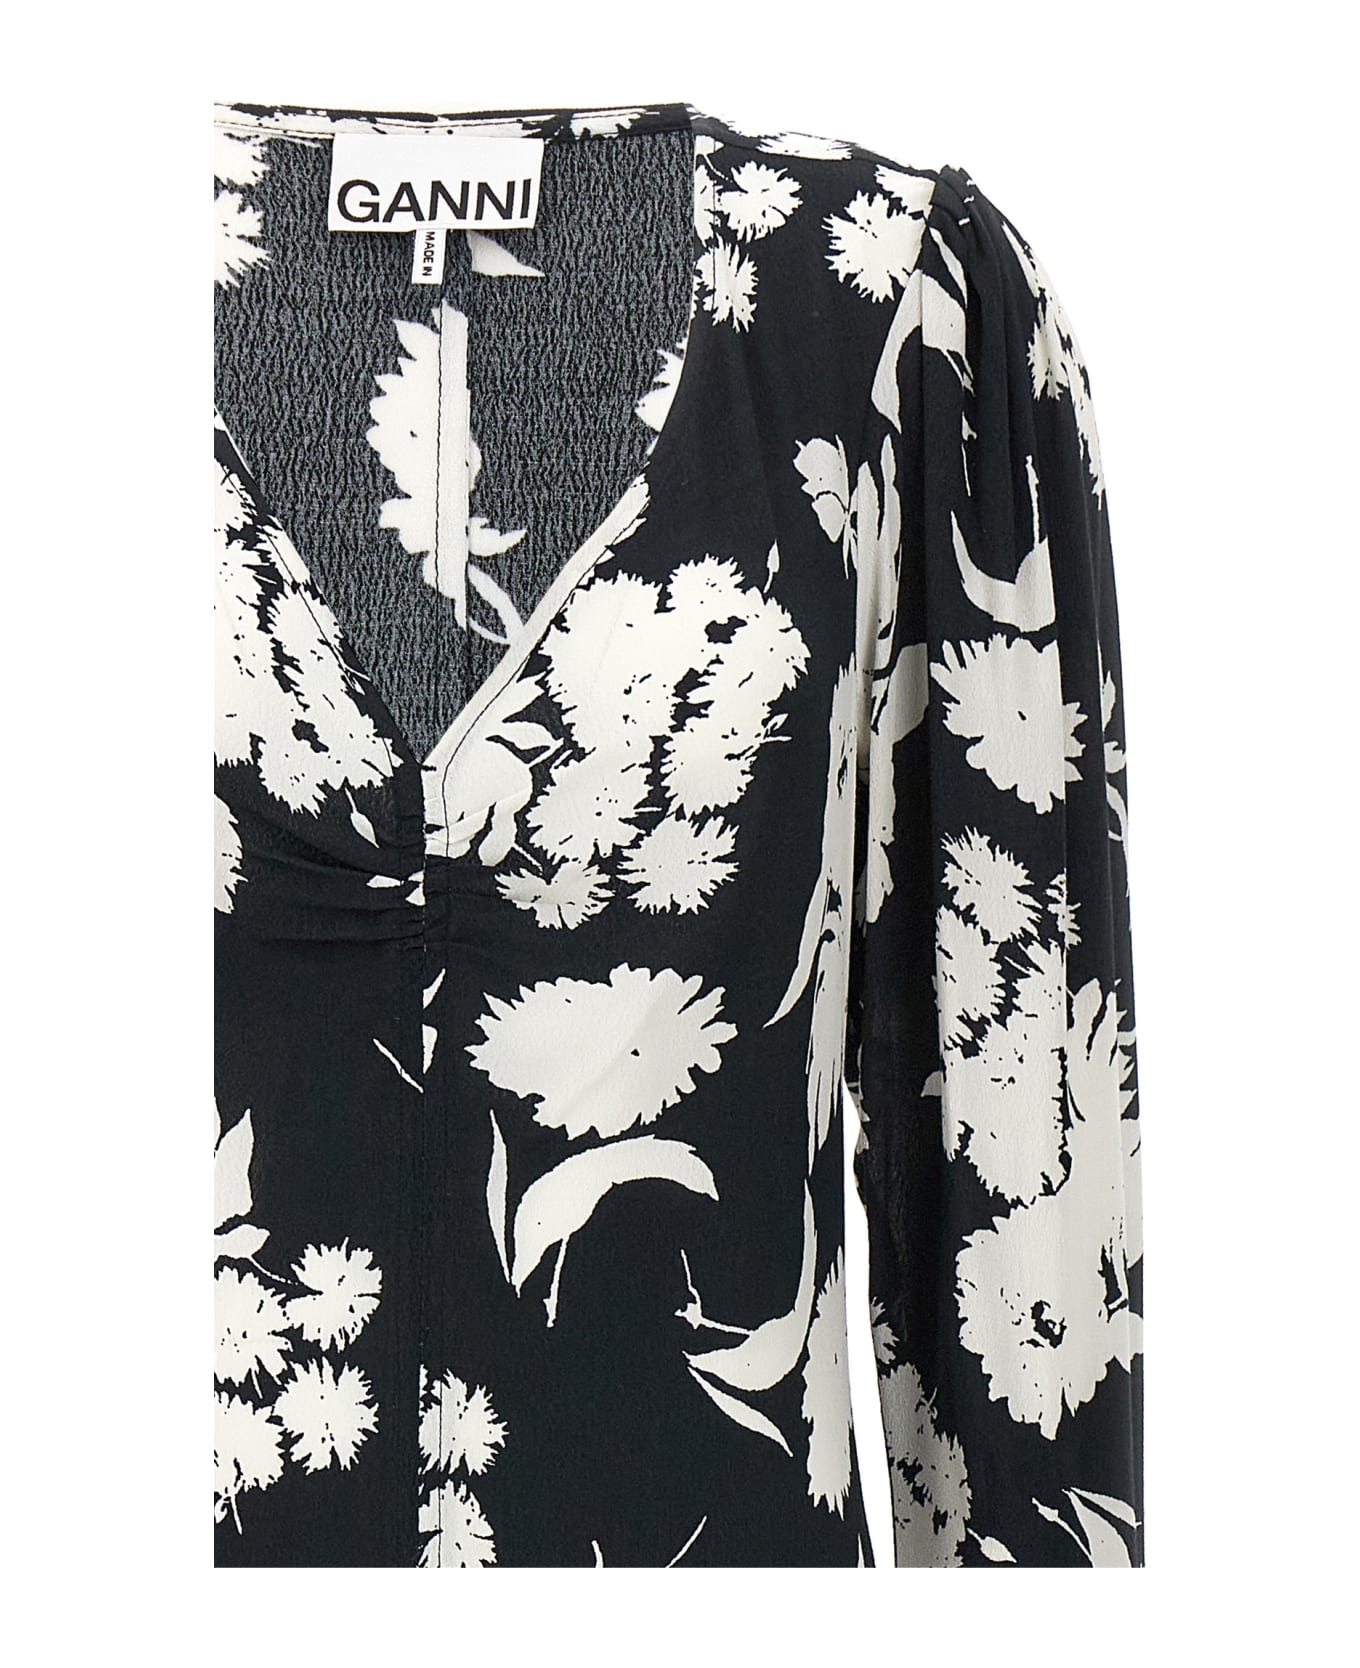 Ganni Floral Dress - White/Black